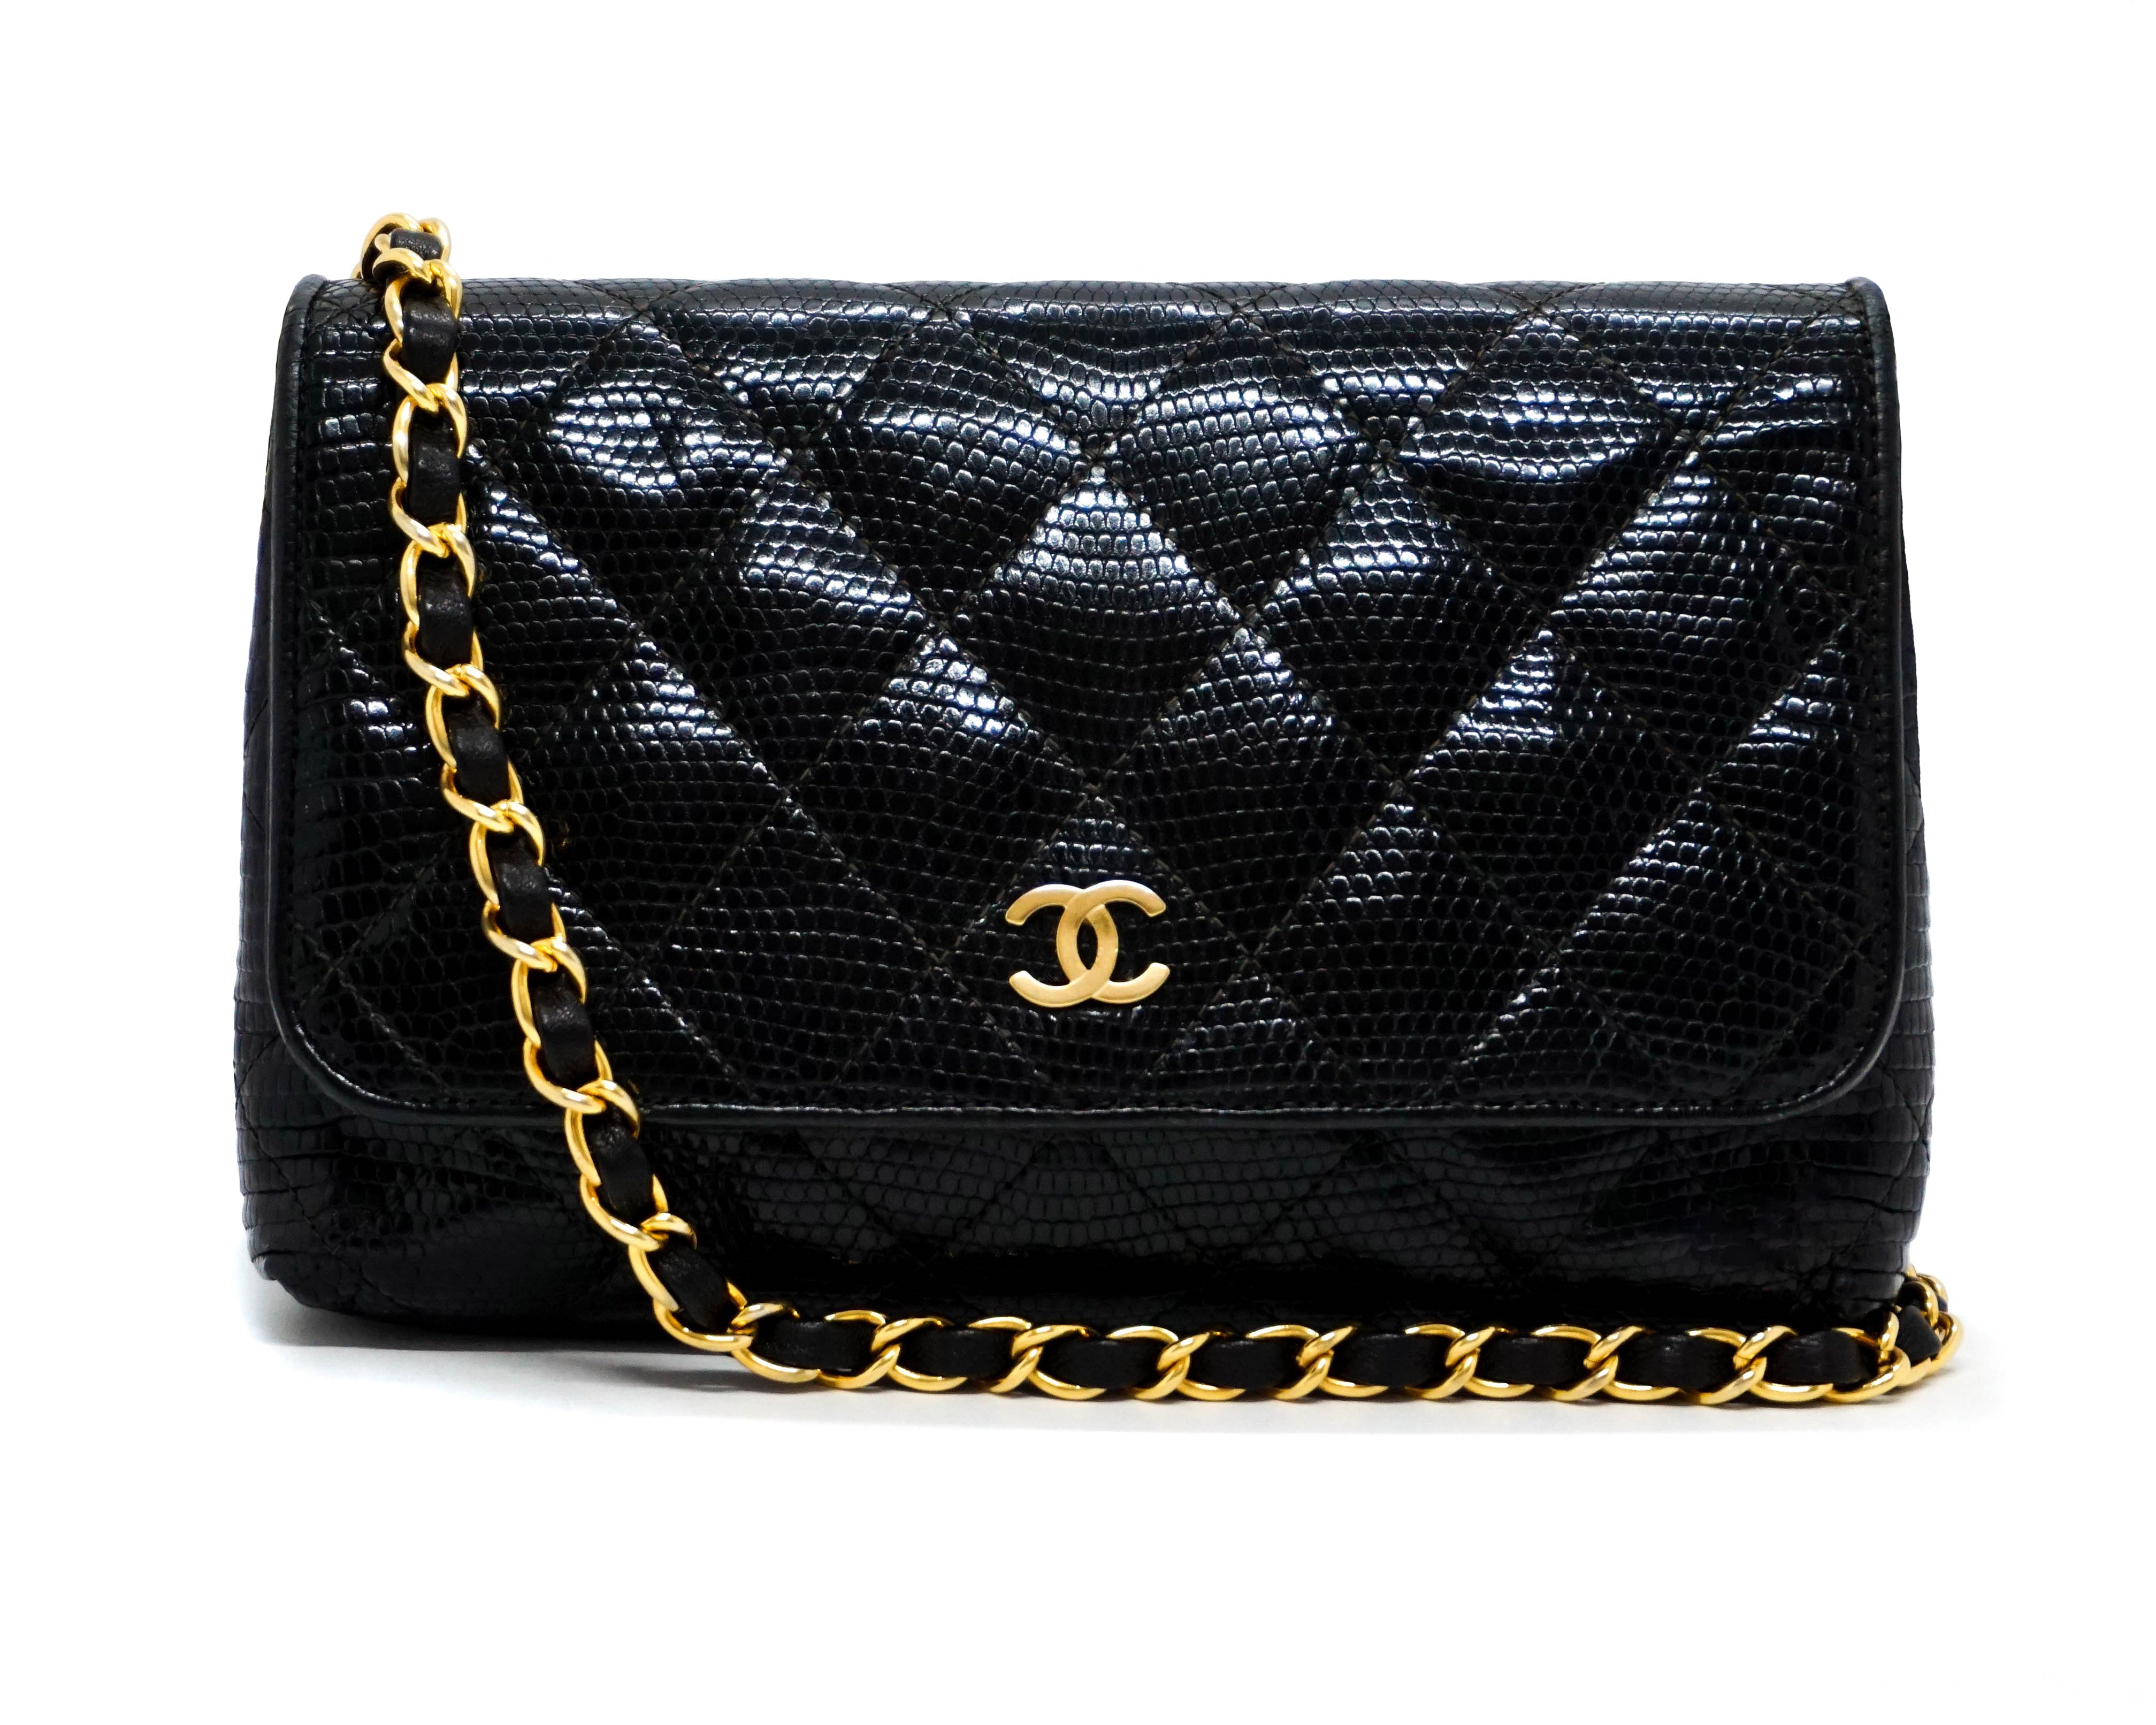 CHANEL black lizard exotic leather flap bag - vintage – Loubi, Lou & Coco